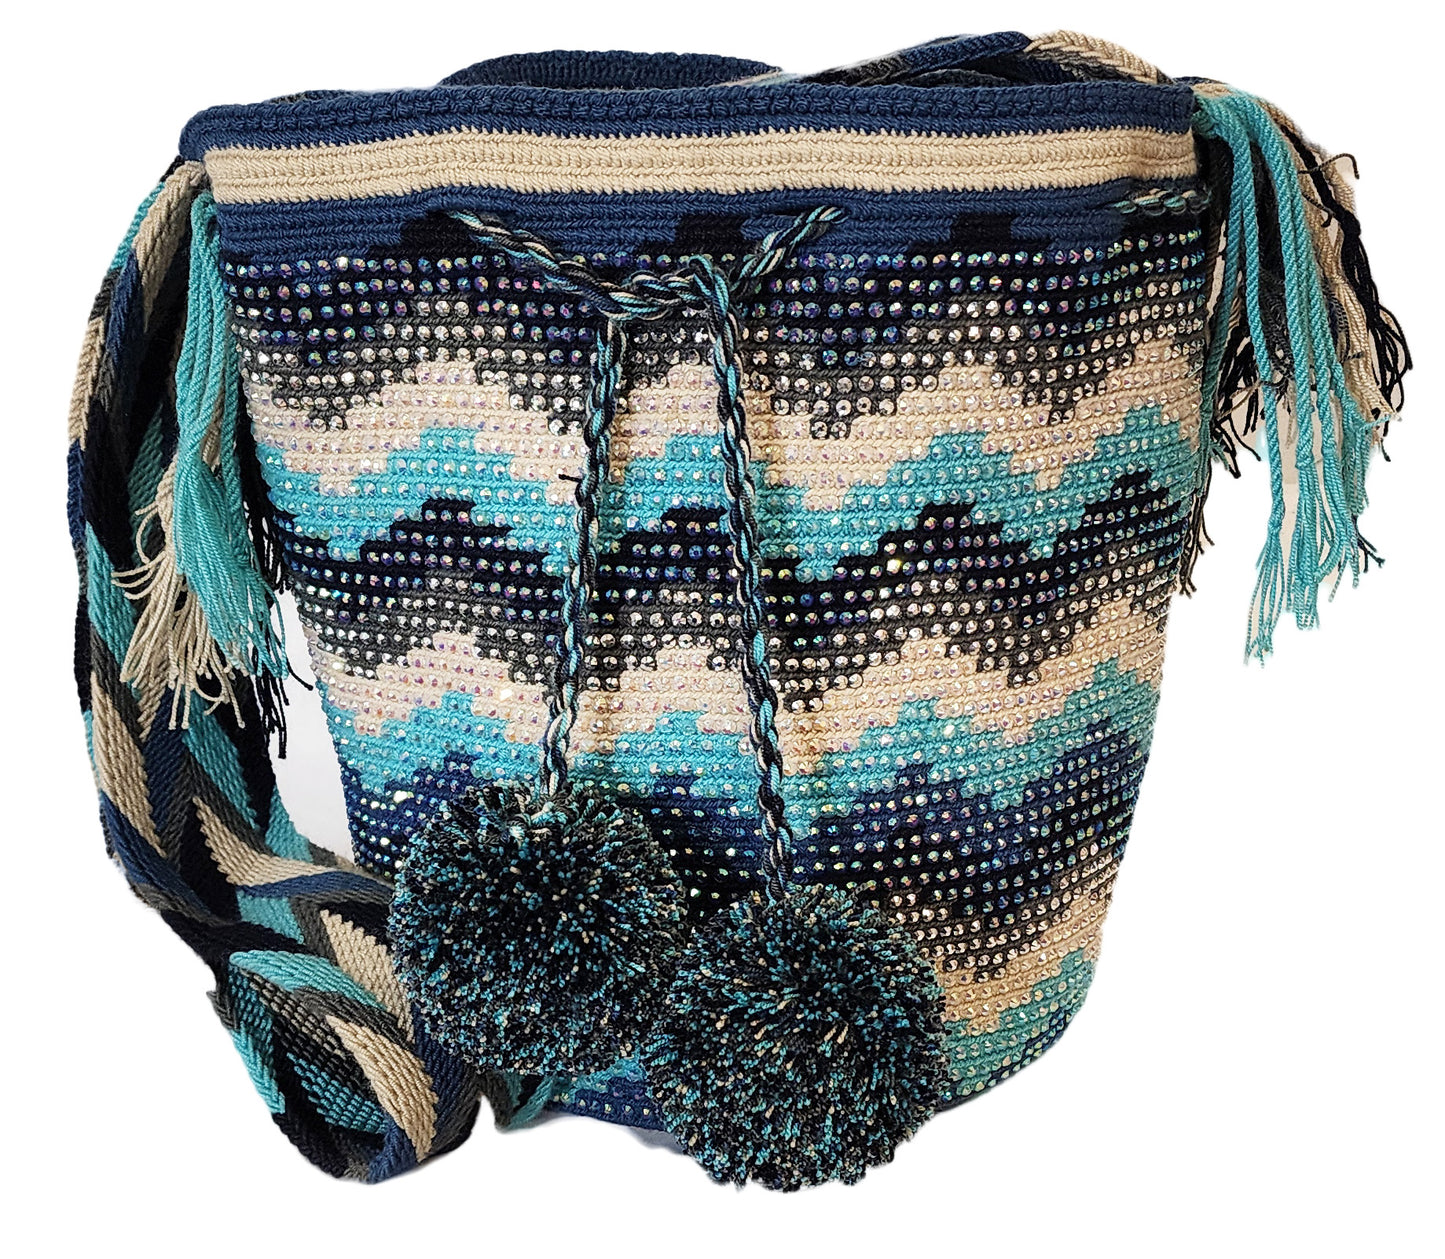 Aviana Handmade Crochet Wayuu Mochila Bag - Wuitusu